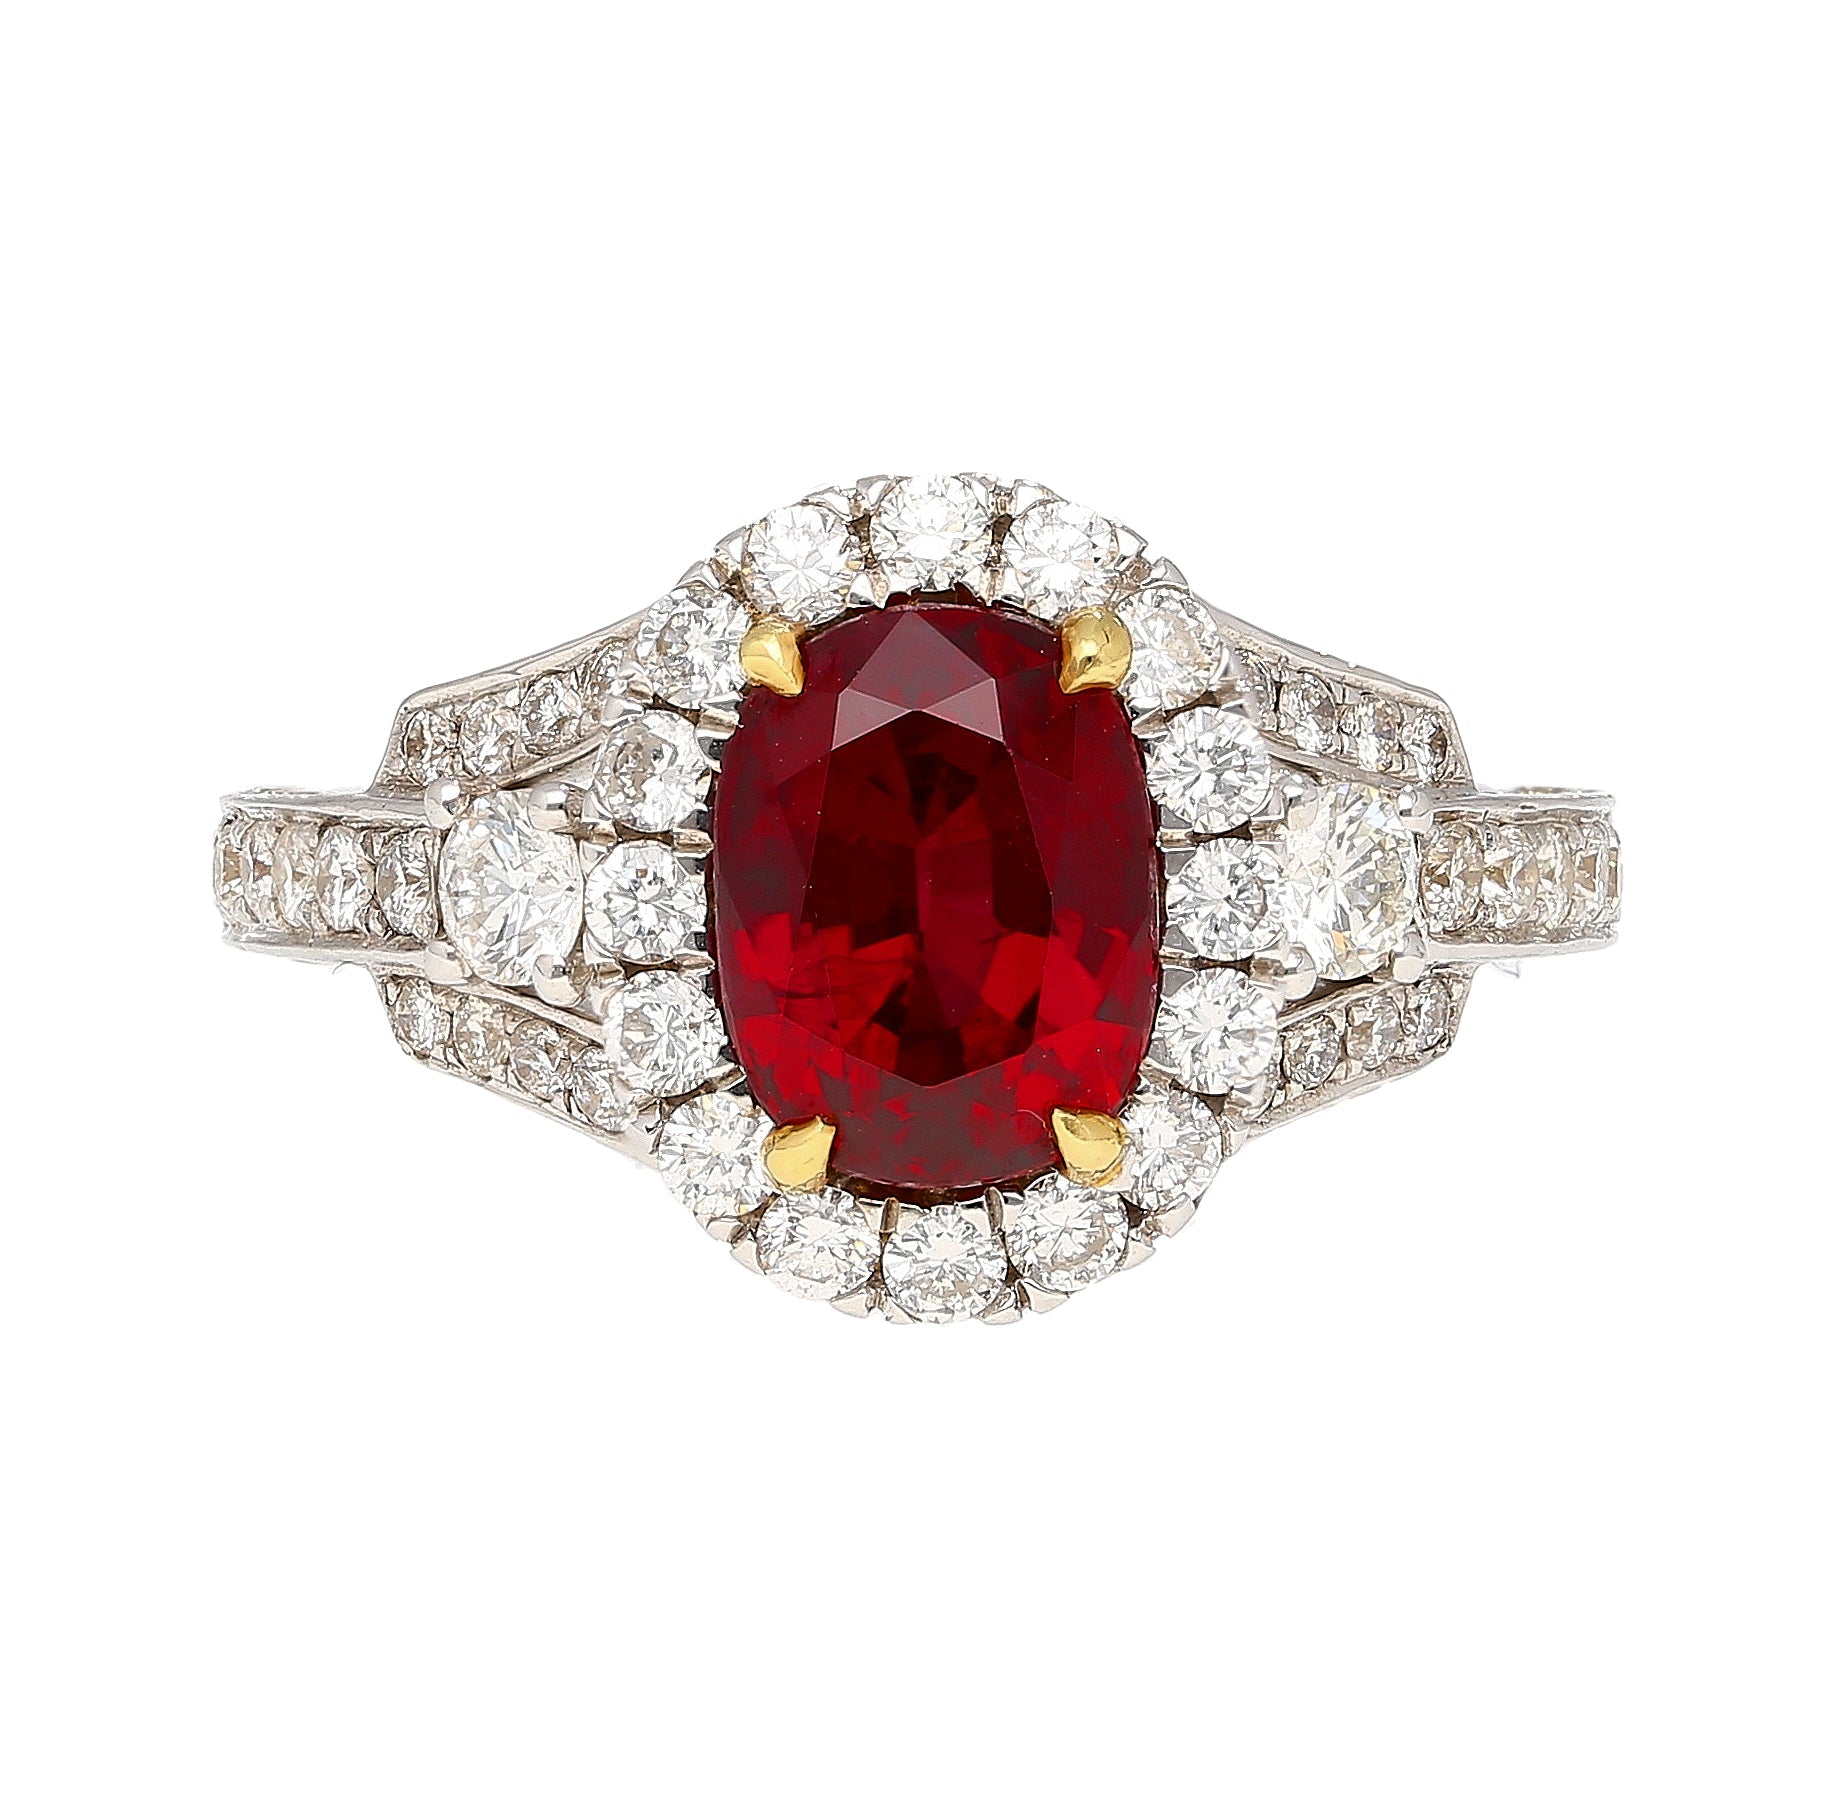 2_20-carat-Vivid-Red-Oval-Cut-Ruby-Diamond-Retro-Regal-Style-Vintage-Ring-Rings.jpg